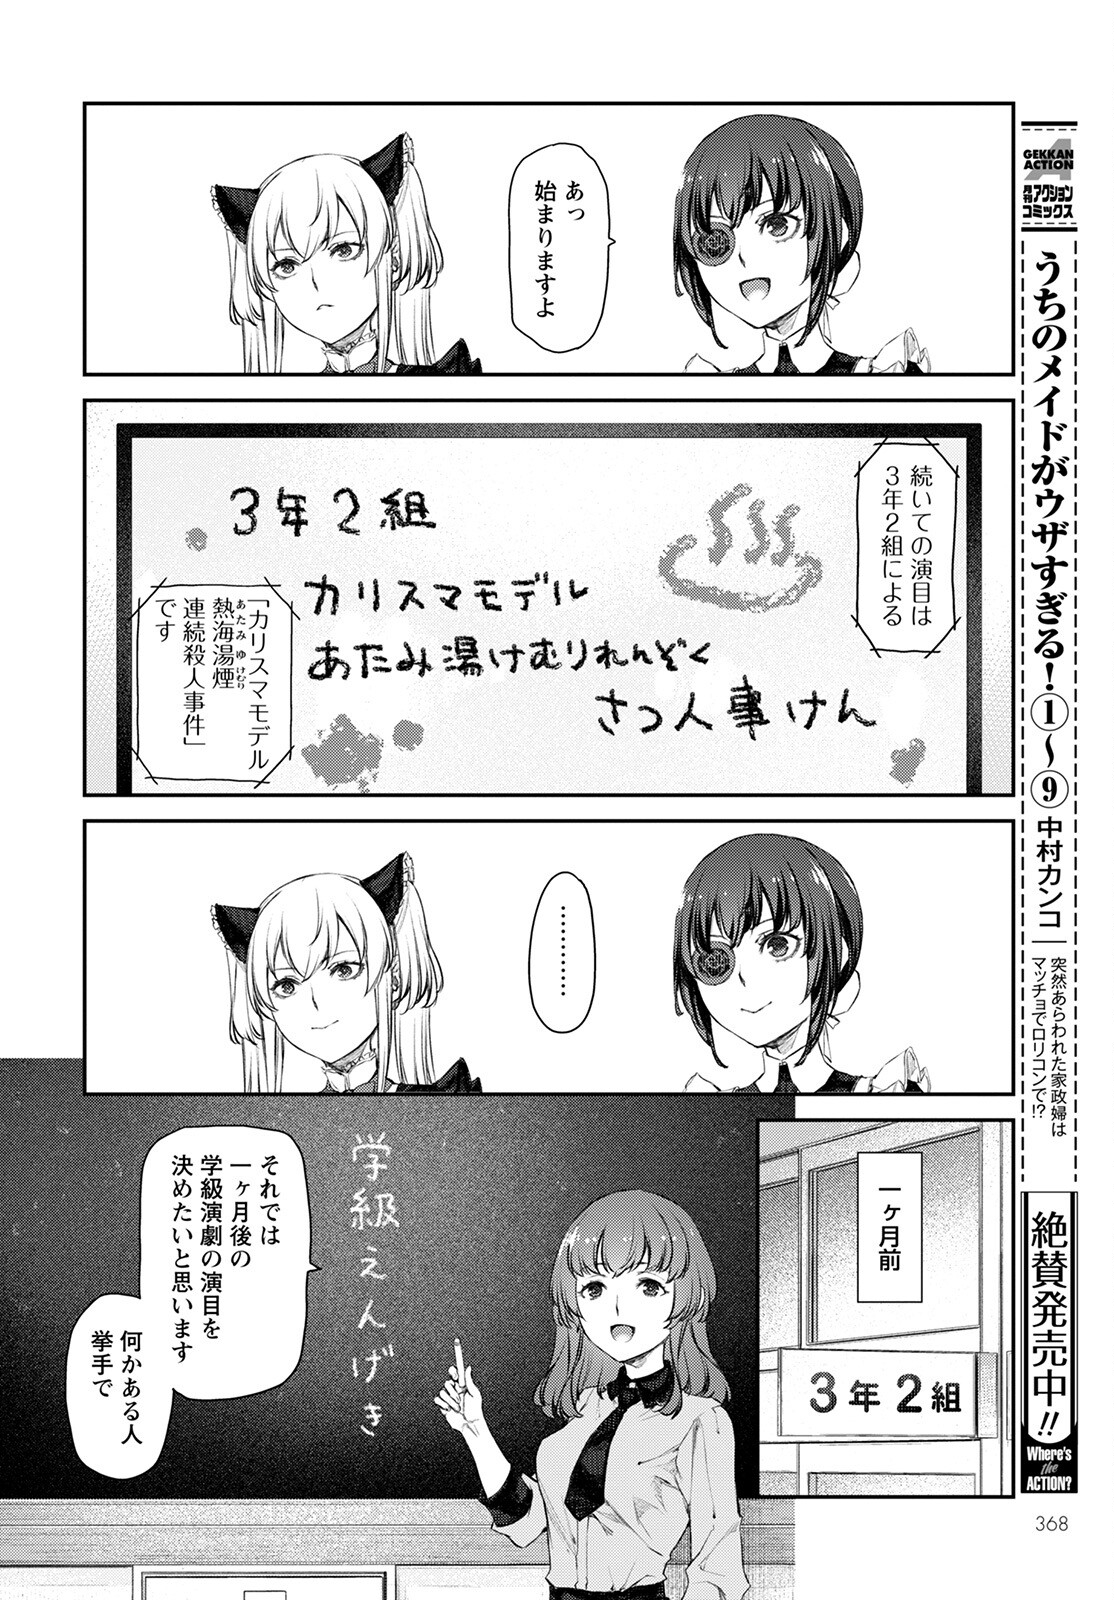 Uchi no Maid ga Uzasugiru! - Chapter 53 - Page 2